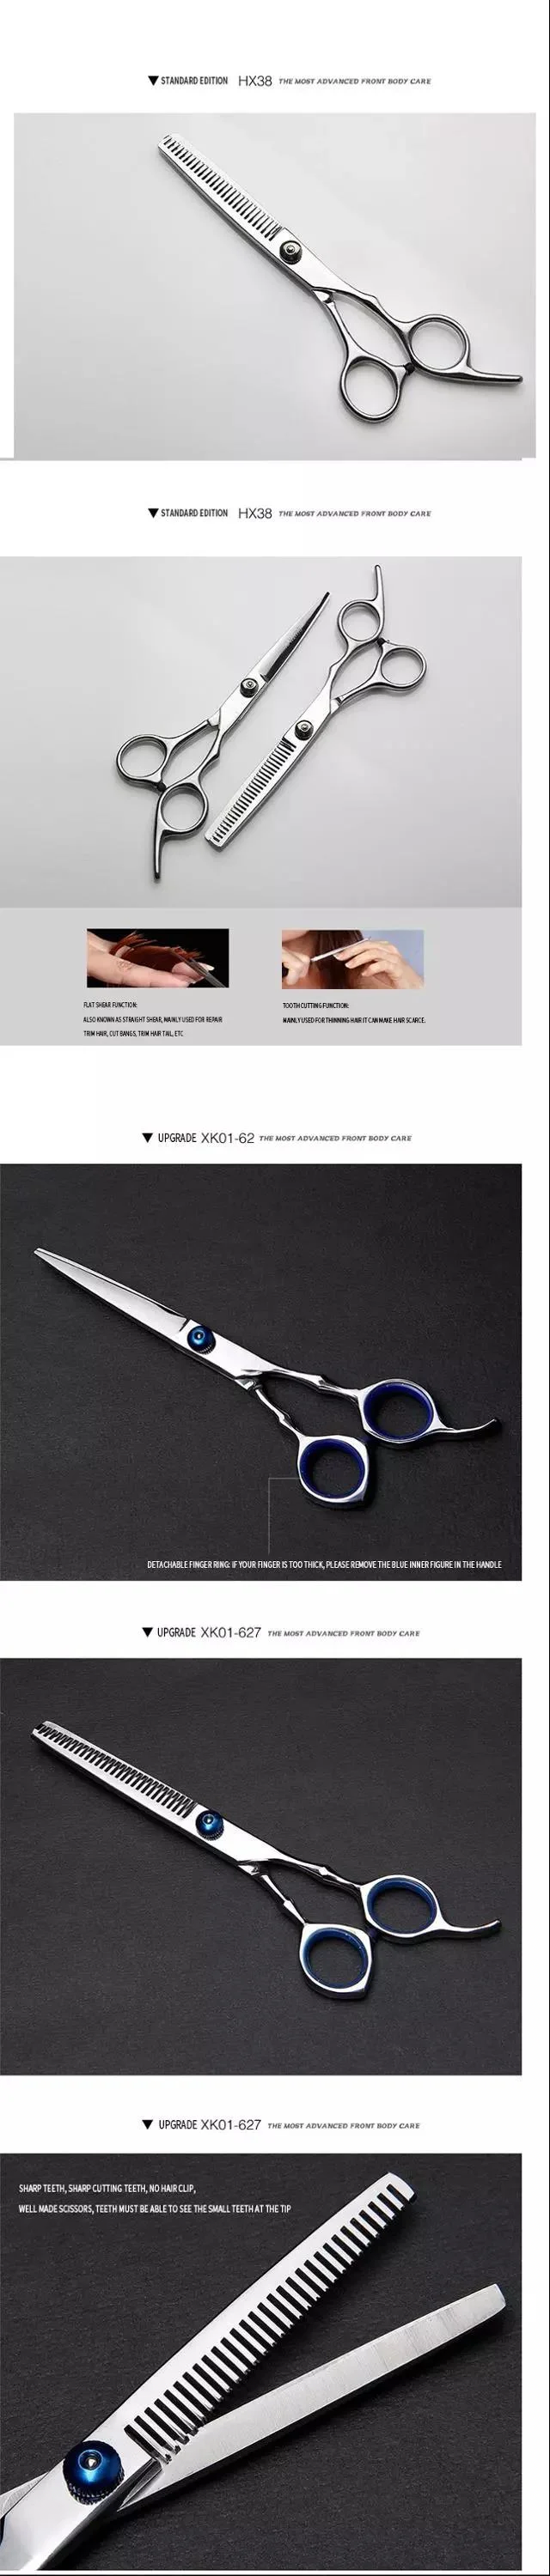 Professional Hairdressing Scissors Hairdressing Tools Straight Cutting Scissors Thinning Scissors Set